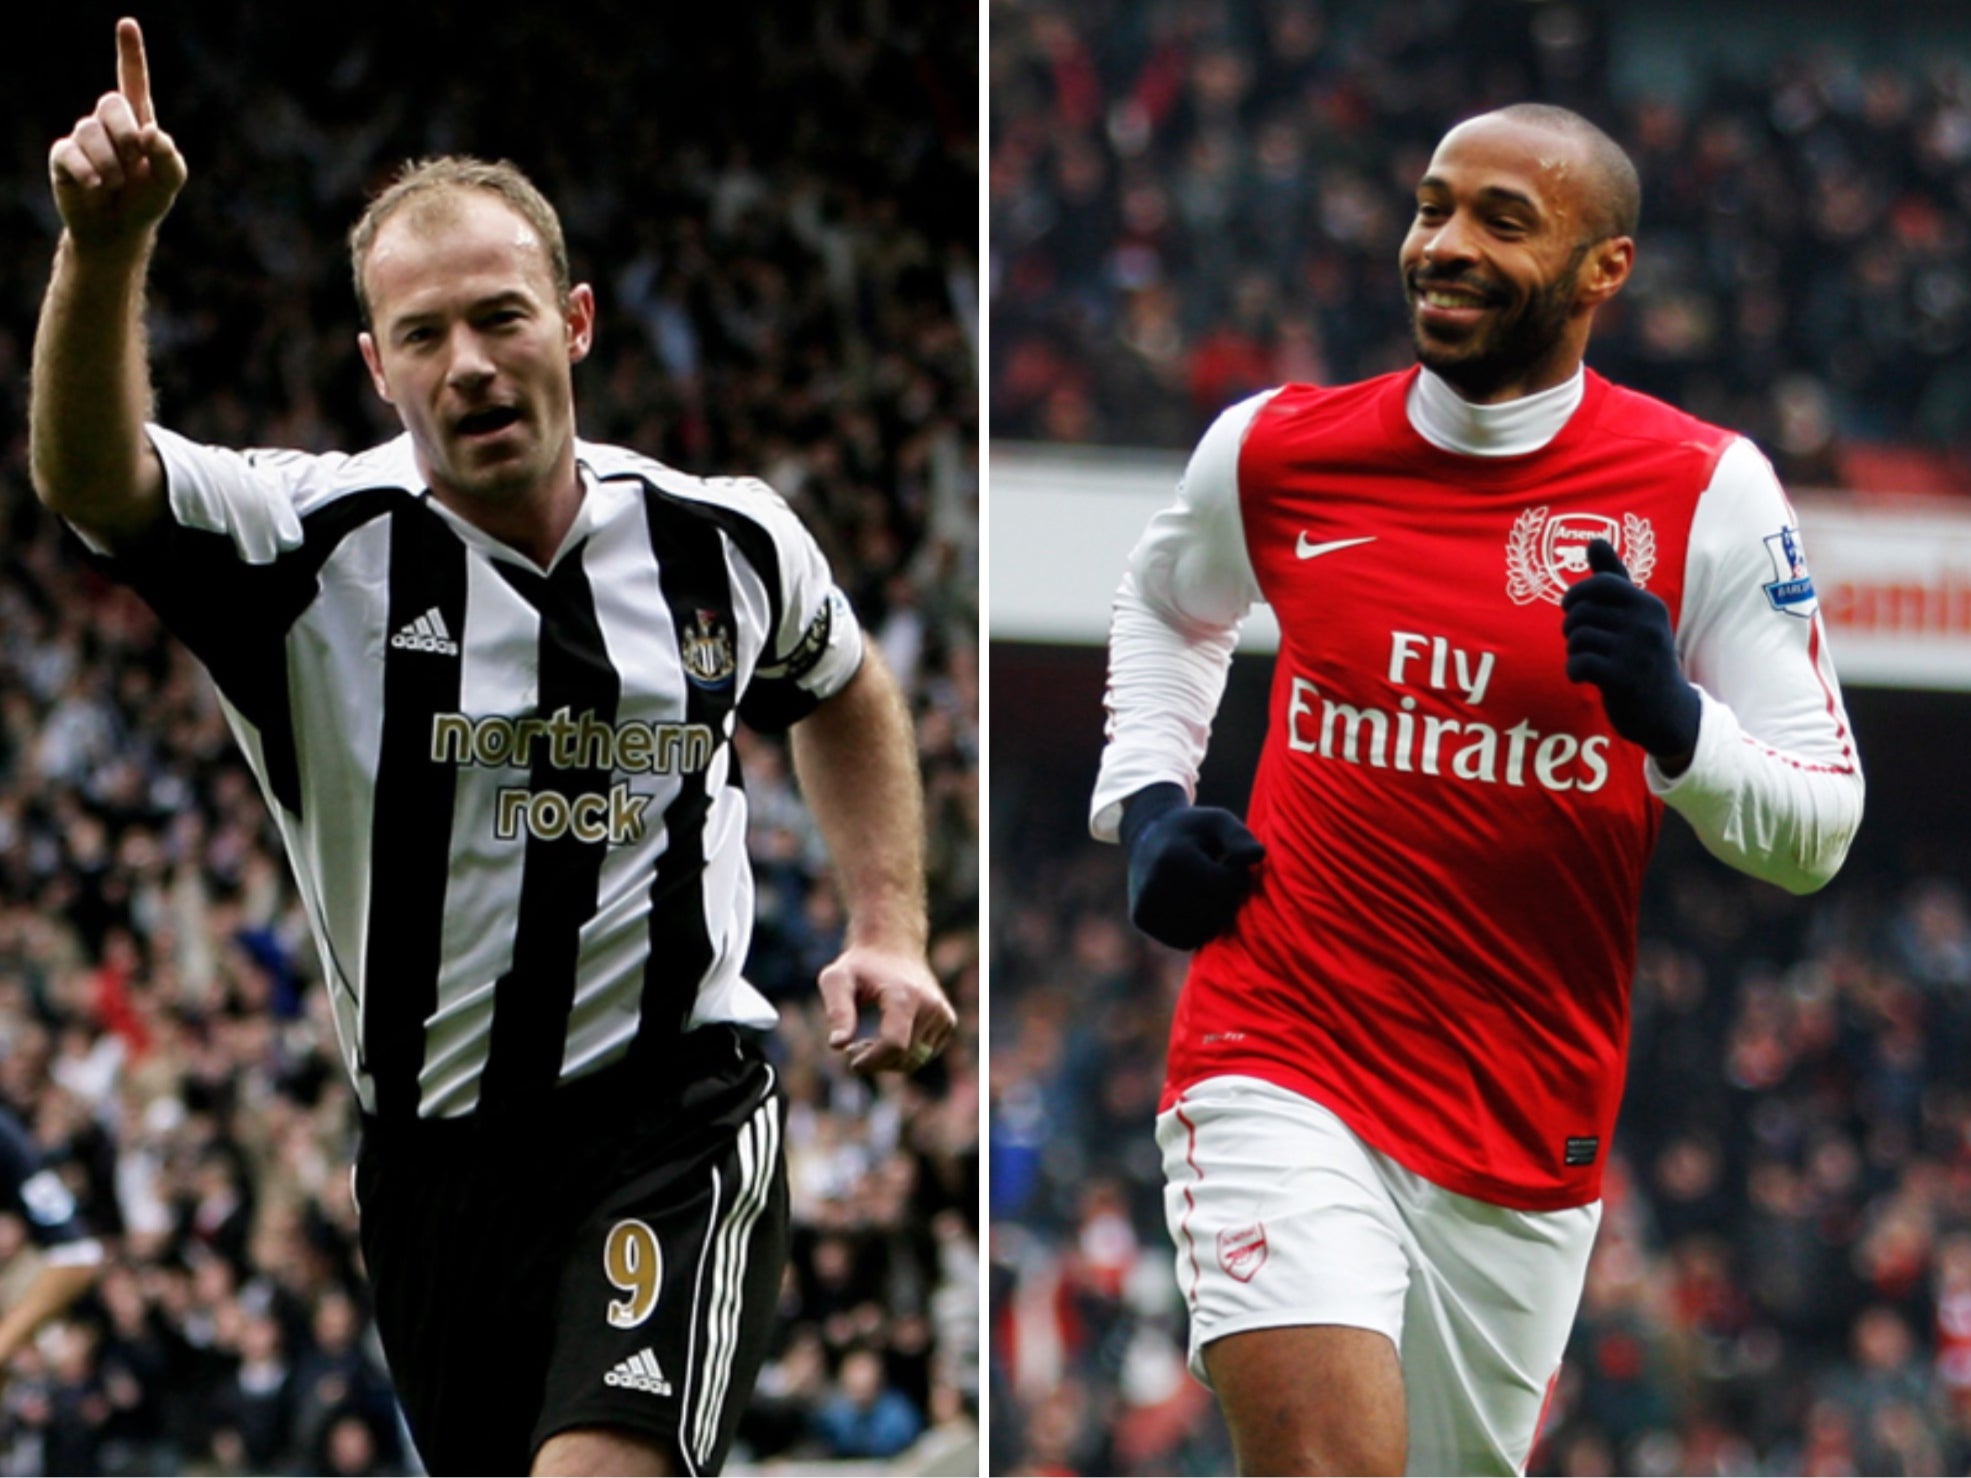 Newcastle striker Alan Shearer and Arsenal striker Thierry Henry